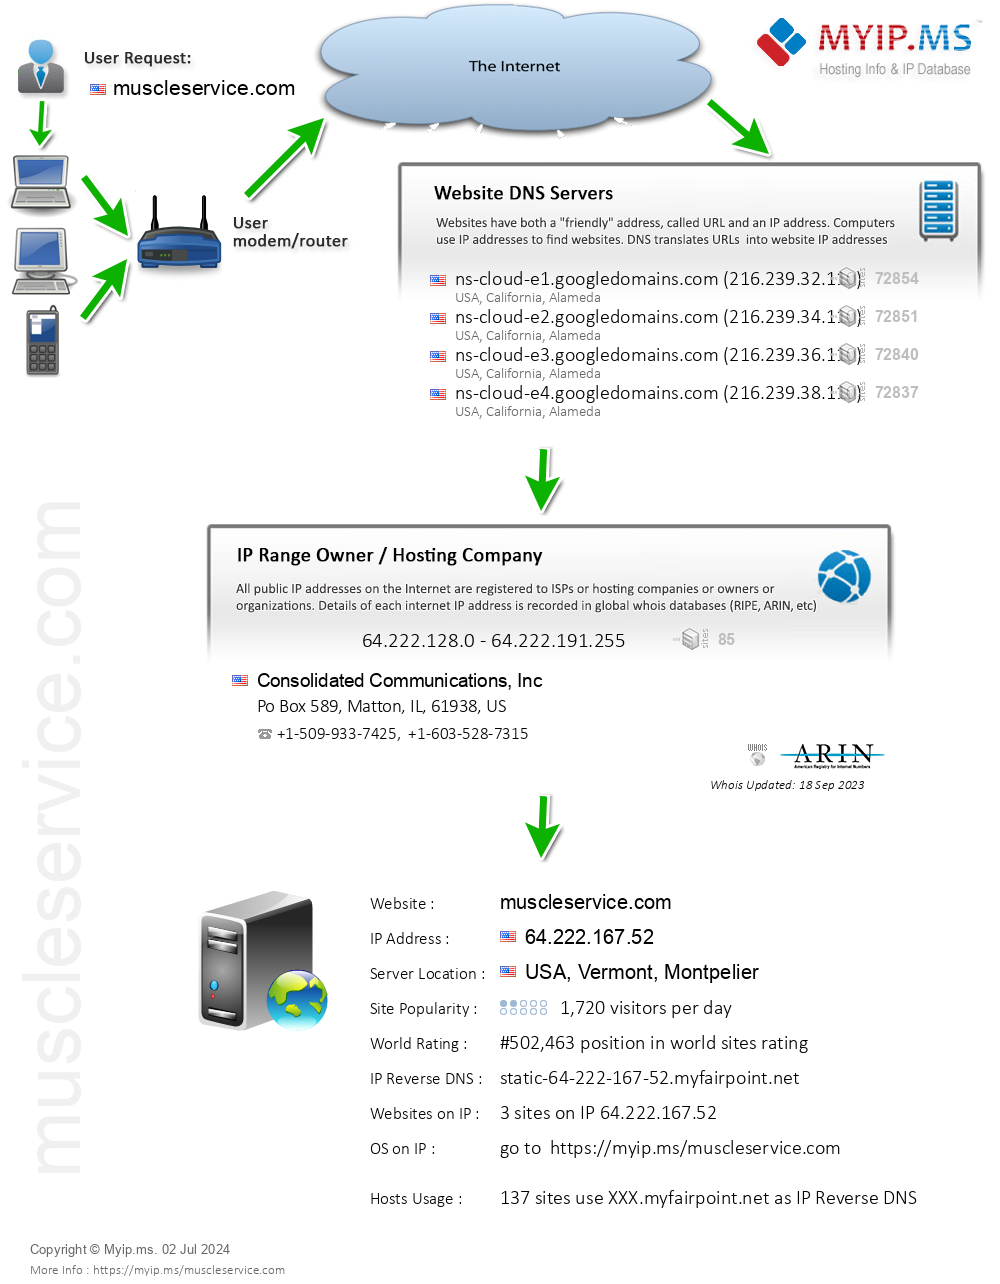 Muscleservice.com - Website Hosting Visual IP Diagram